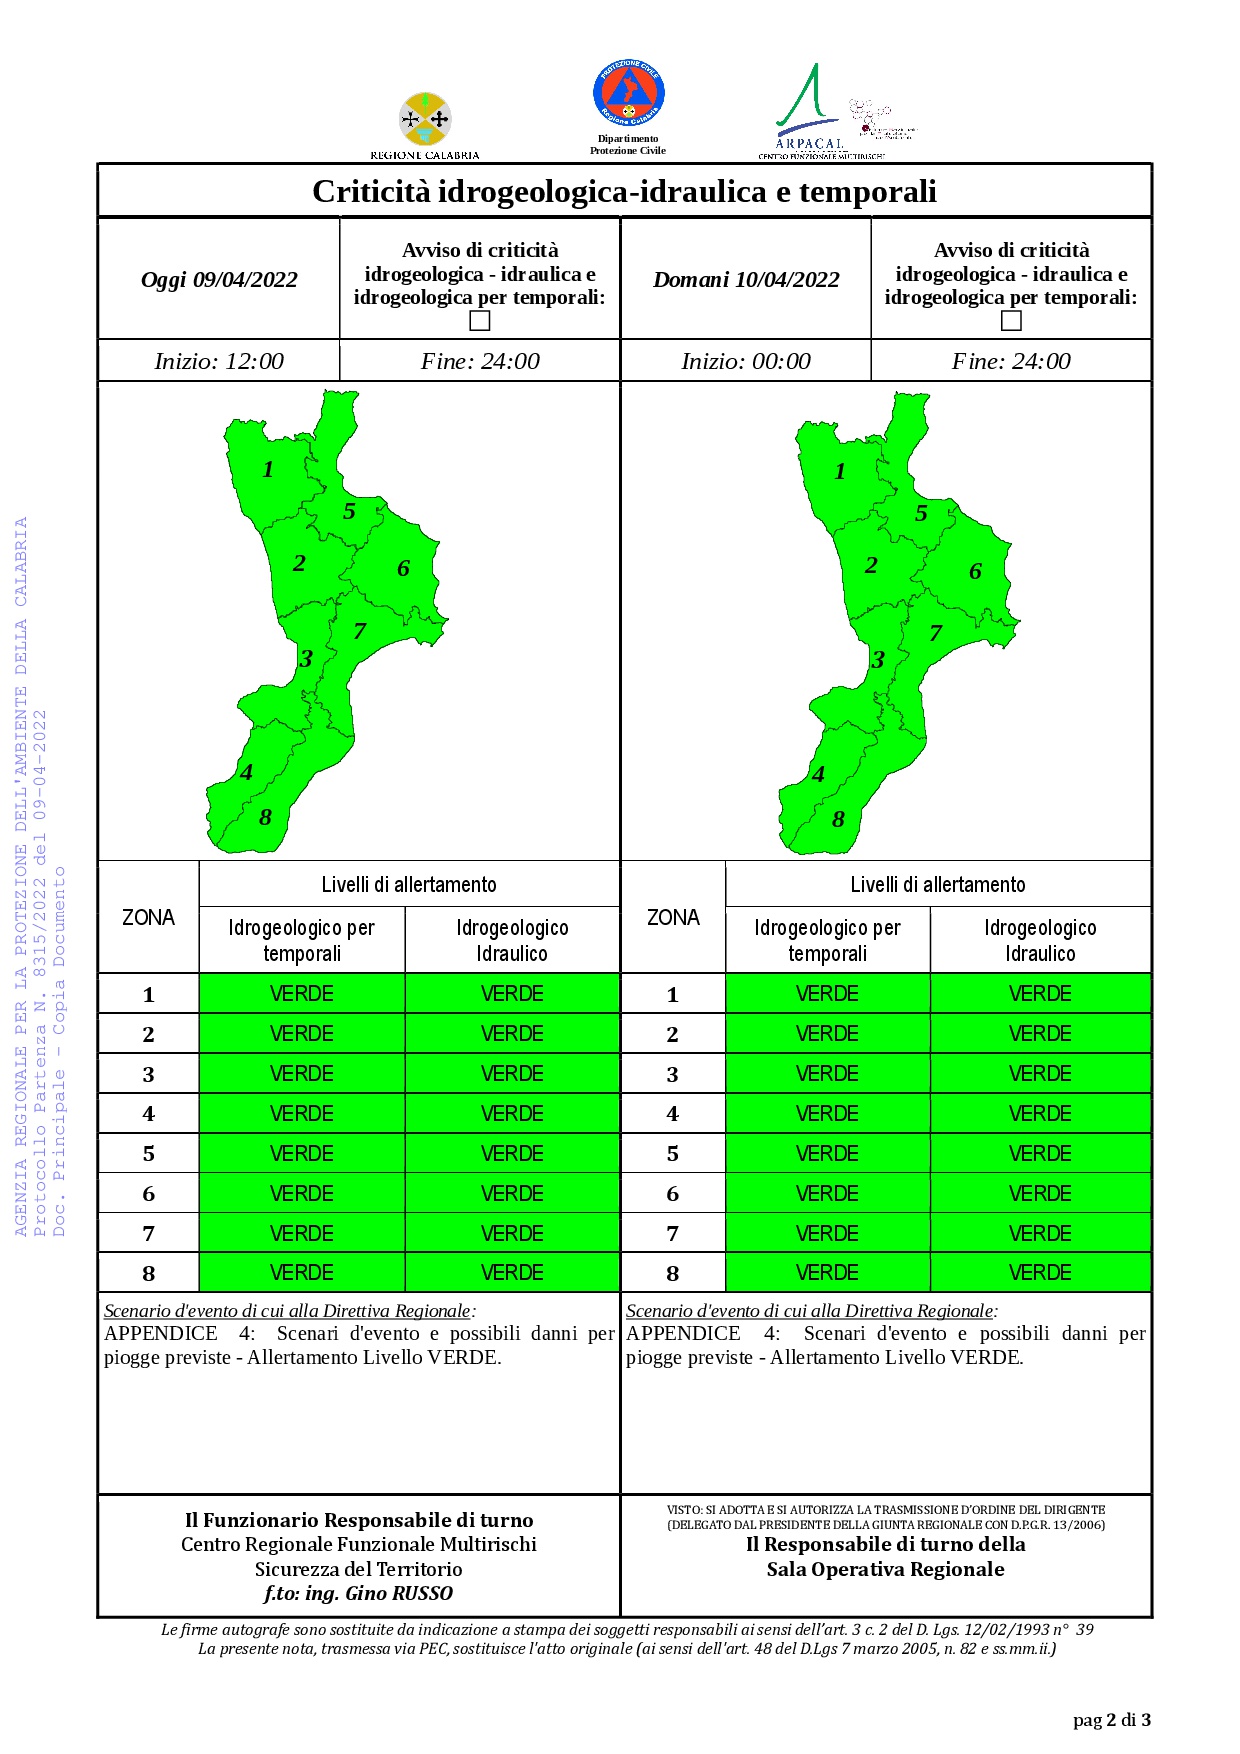 Criticità idrogeologica-idraulica e temporali in Calabria 09-04-2022